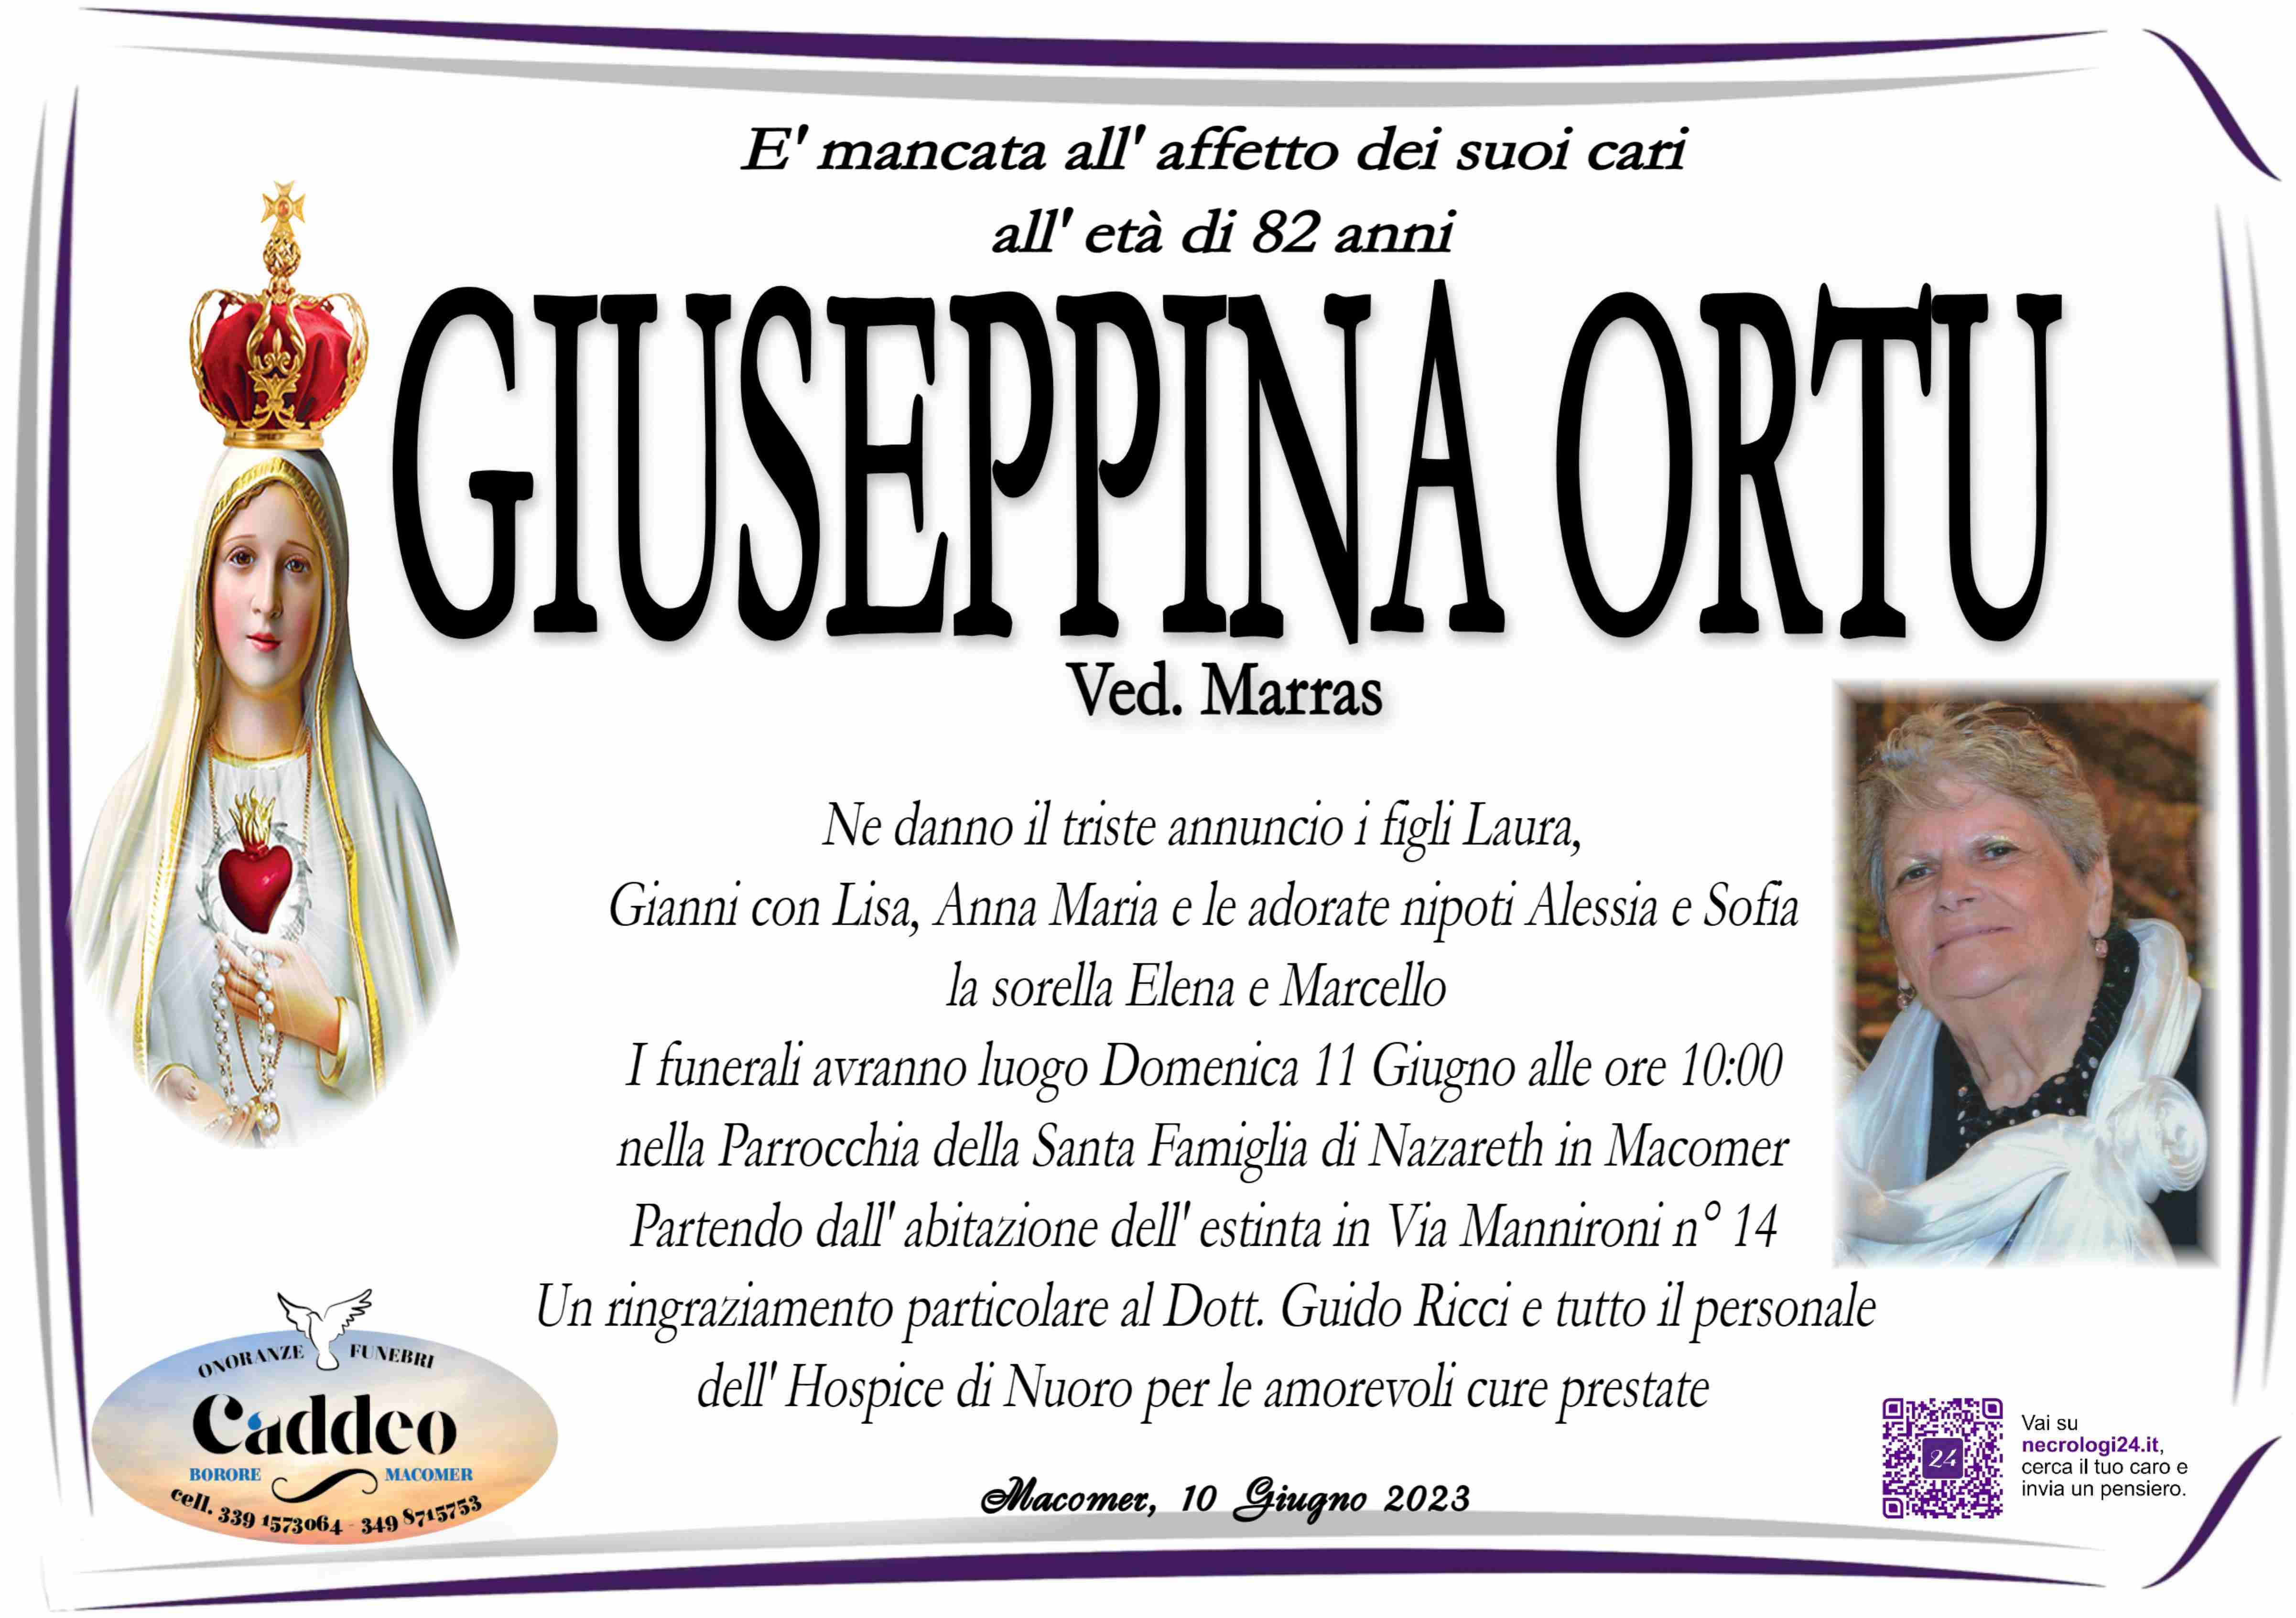 Giuseppina Ortu